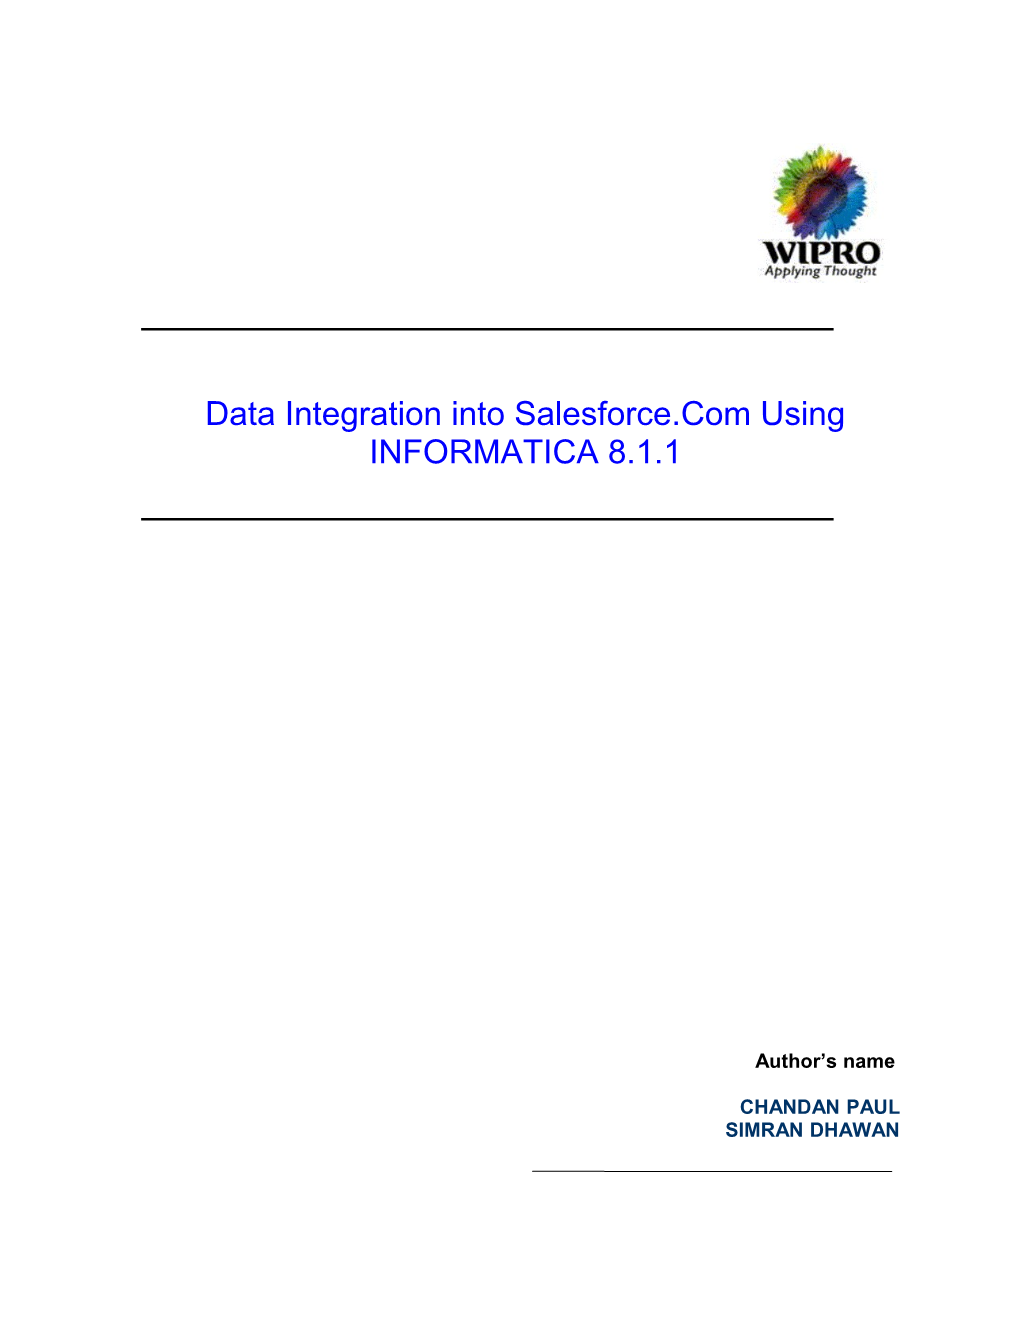 Data Integration Into Salesforce.Com Using INFORMATICA 8.1.1